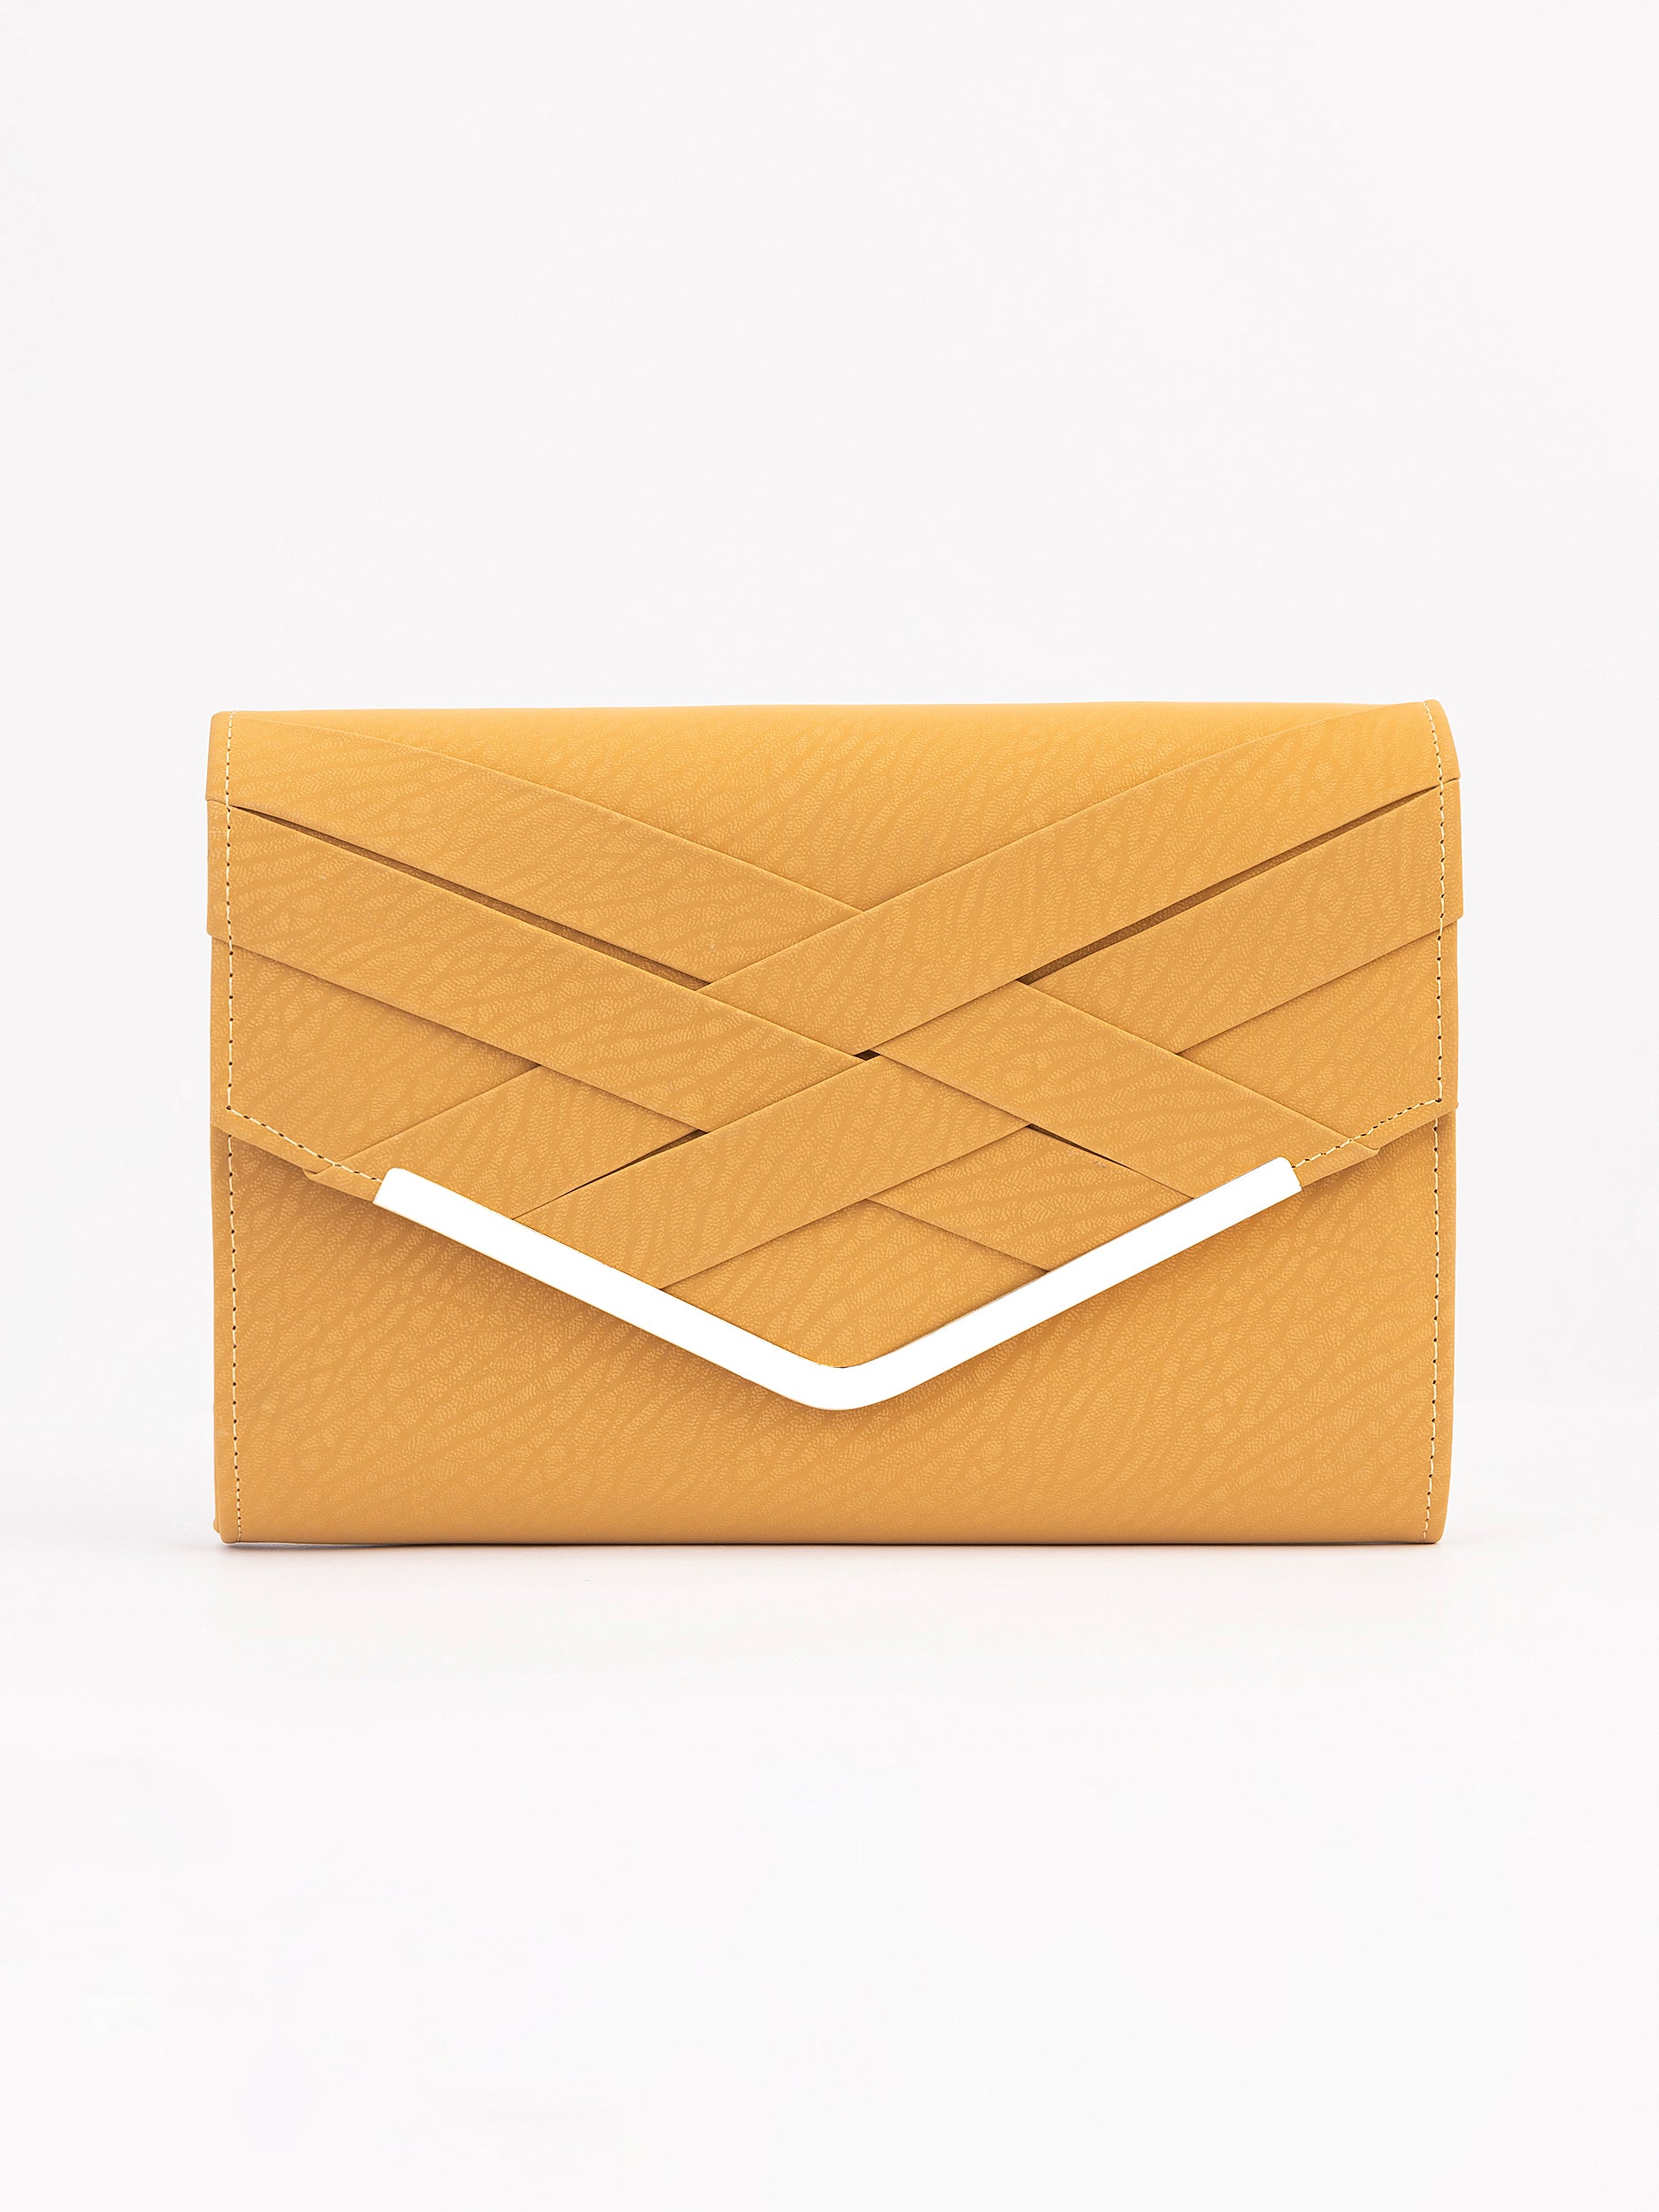 envelope-shaped-clutch